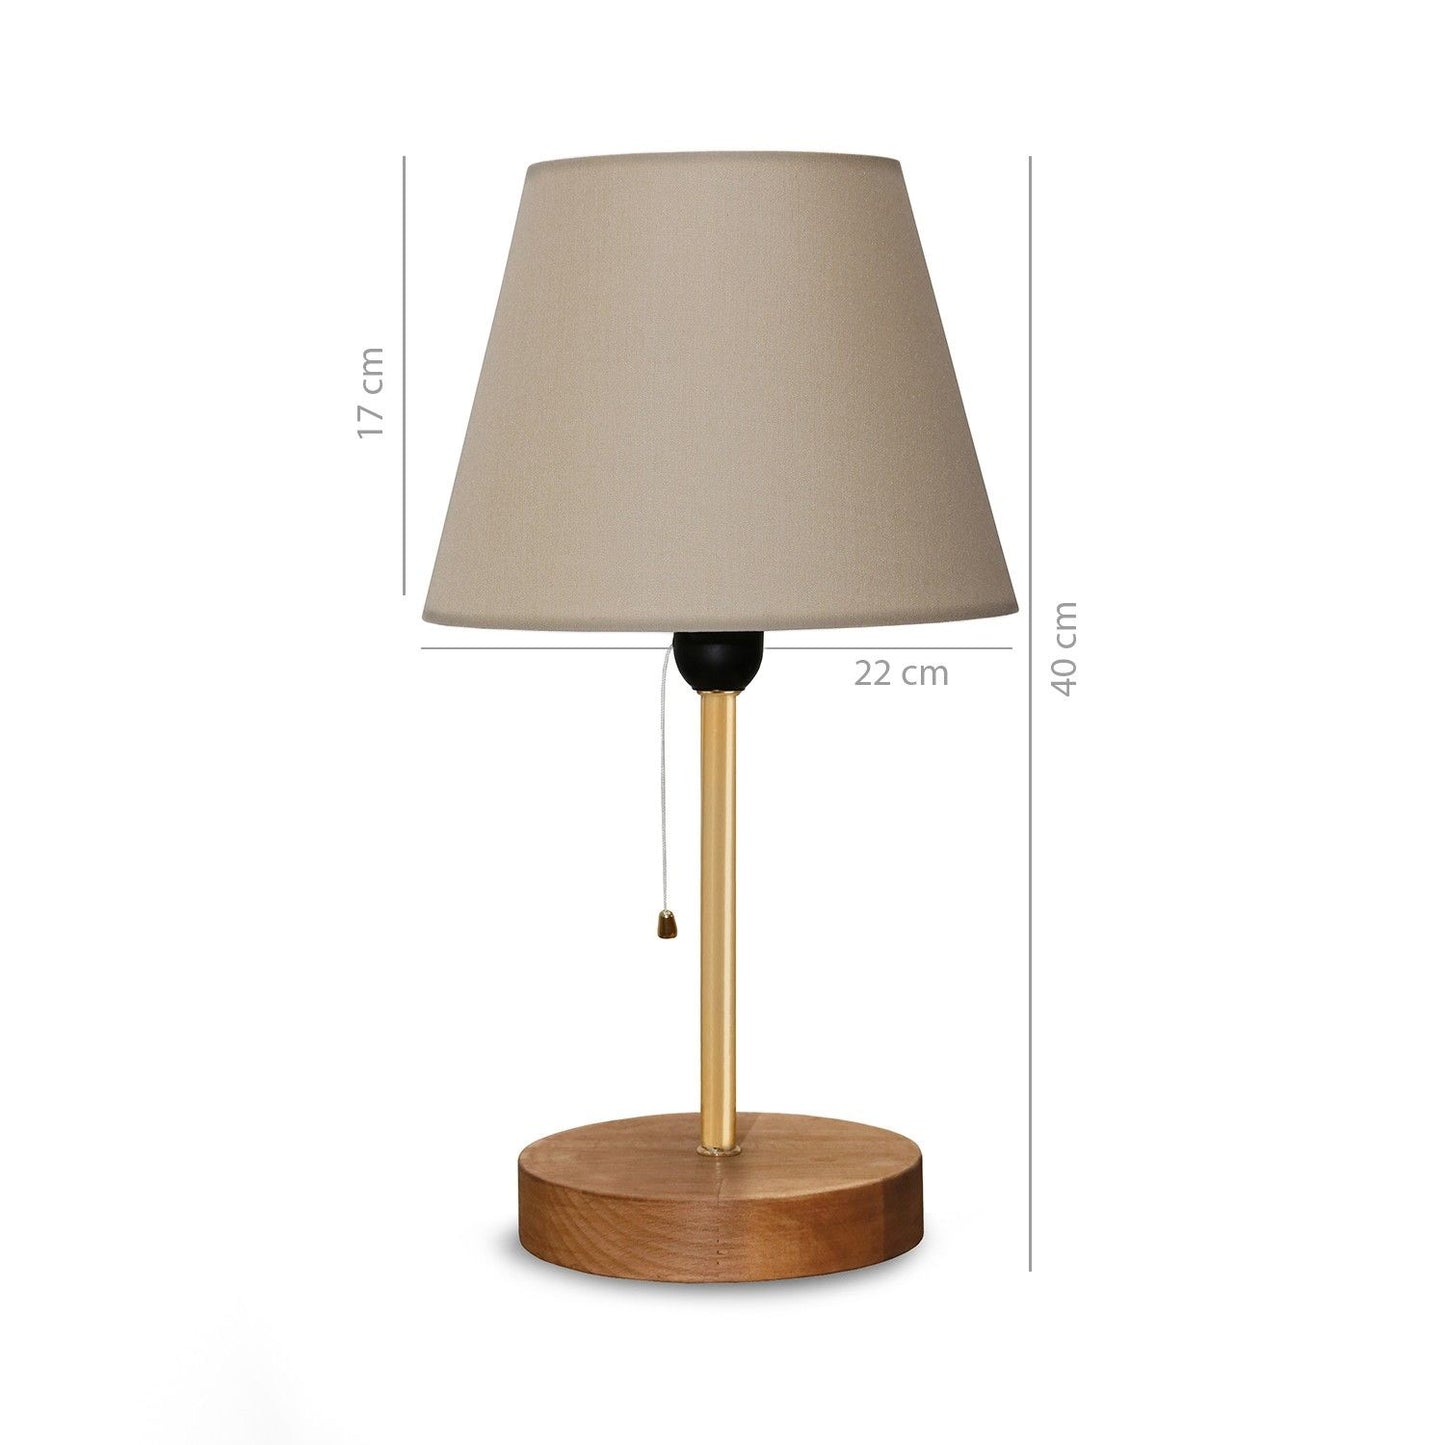 AYD - 2647 - Lampe